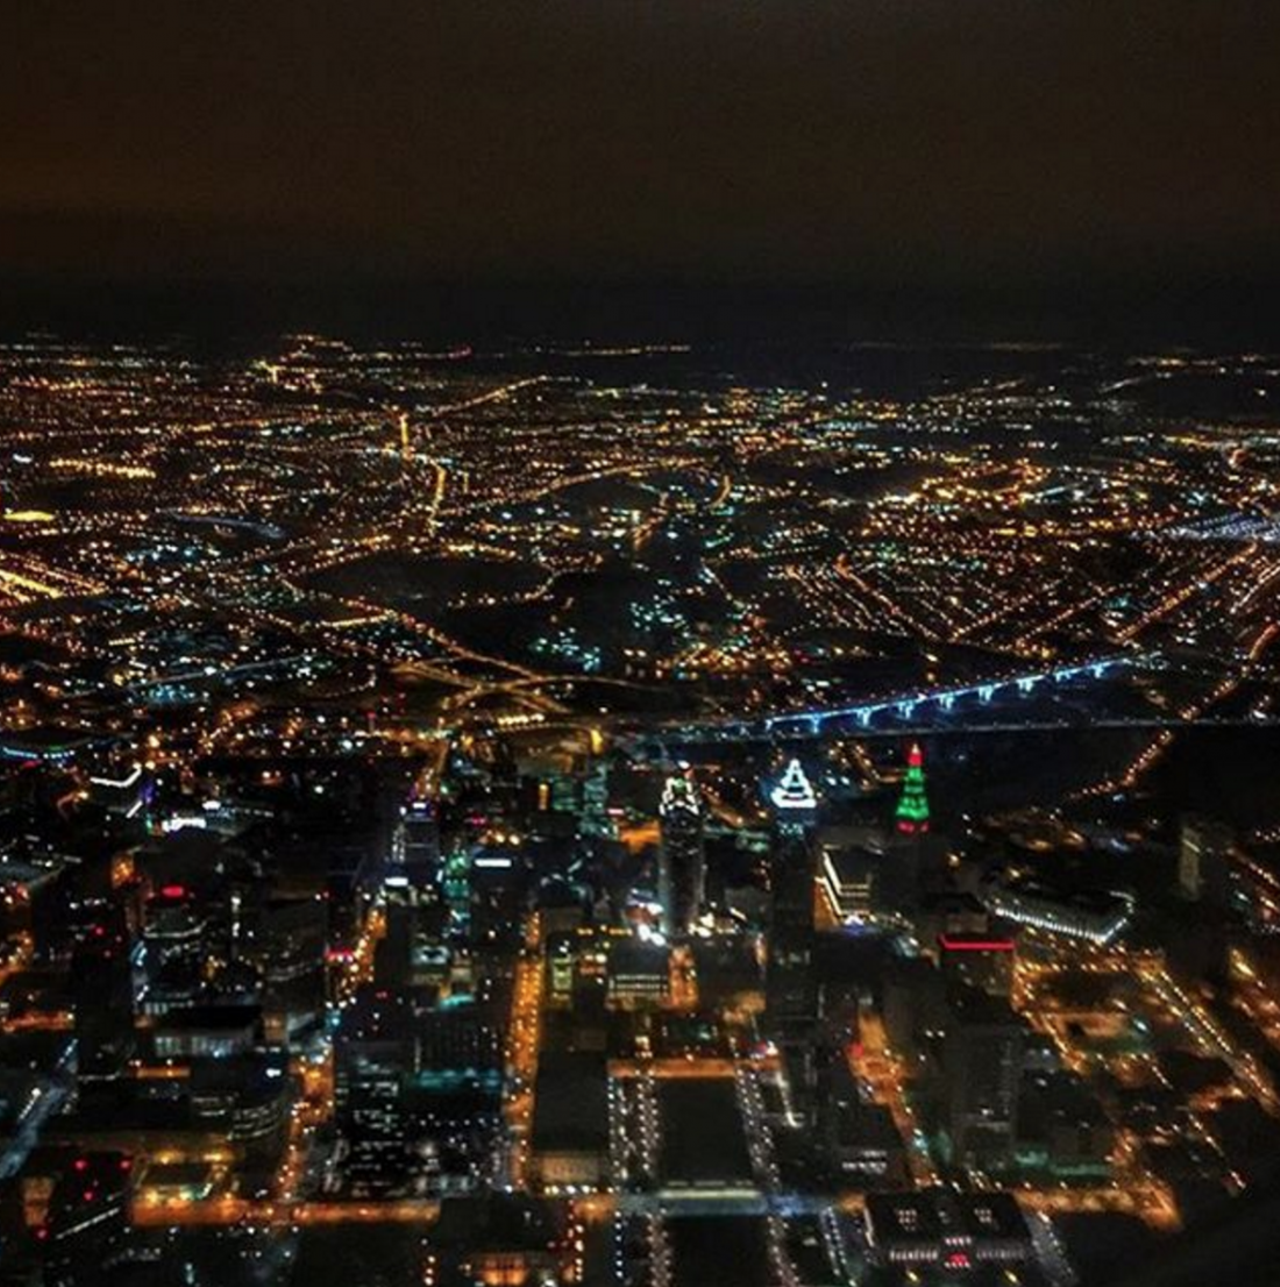 Clevelandgram
Clevelandgram is a collaboration account that features photos tagged with #clevelandgram and #humansofcleveland, frequently sharing unbelievable skyline shots. (Photo via @clevelandgram)